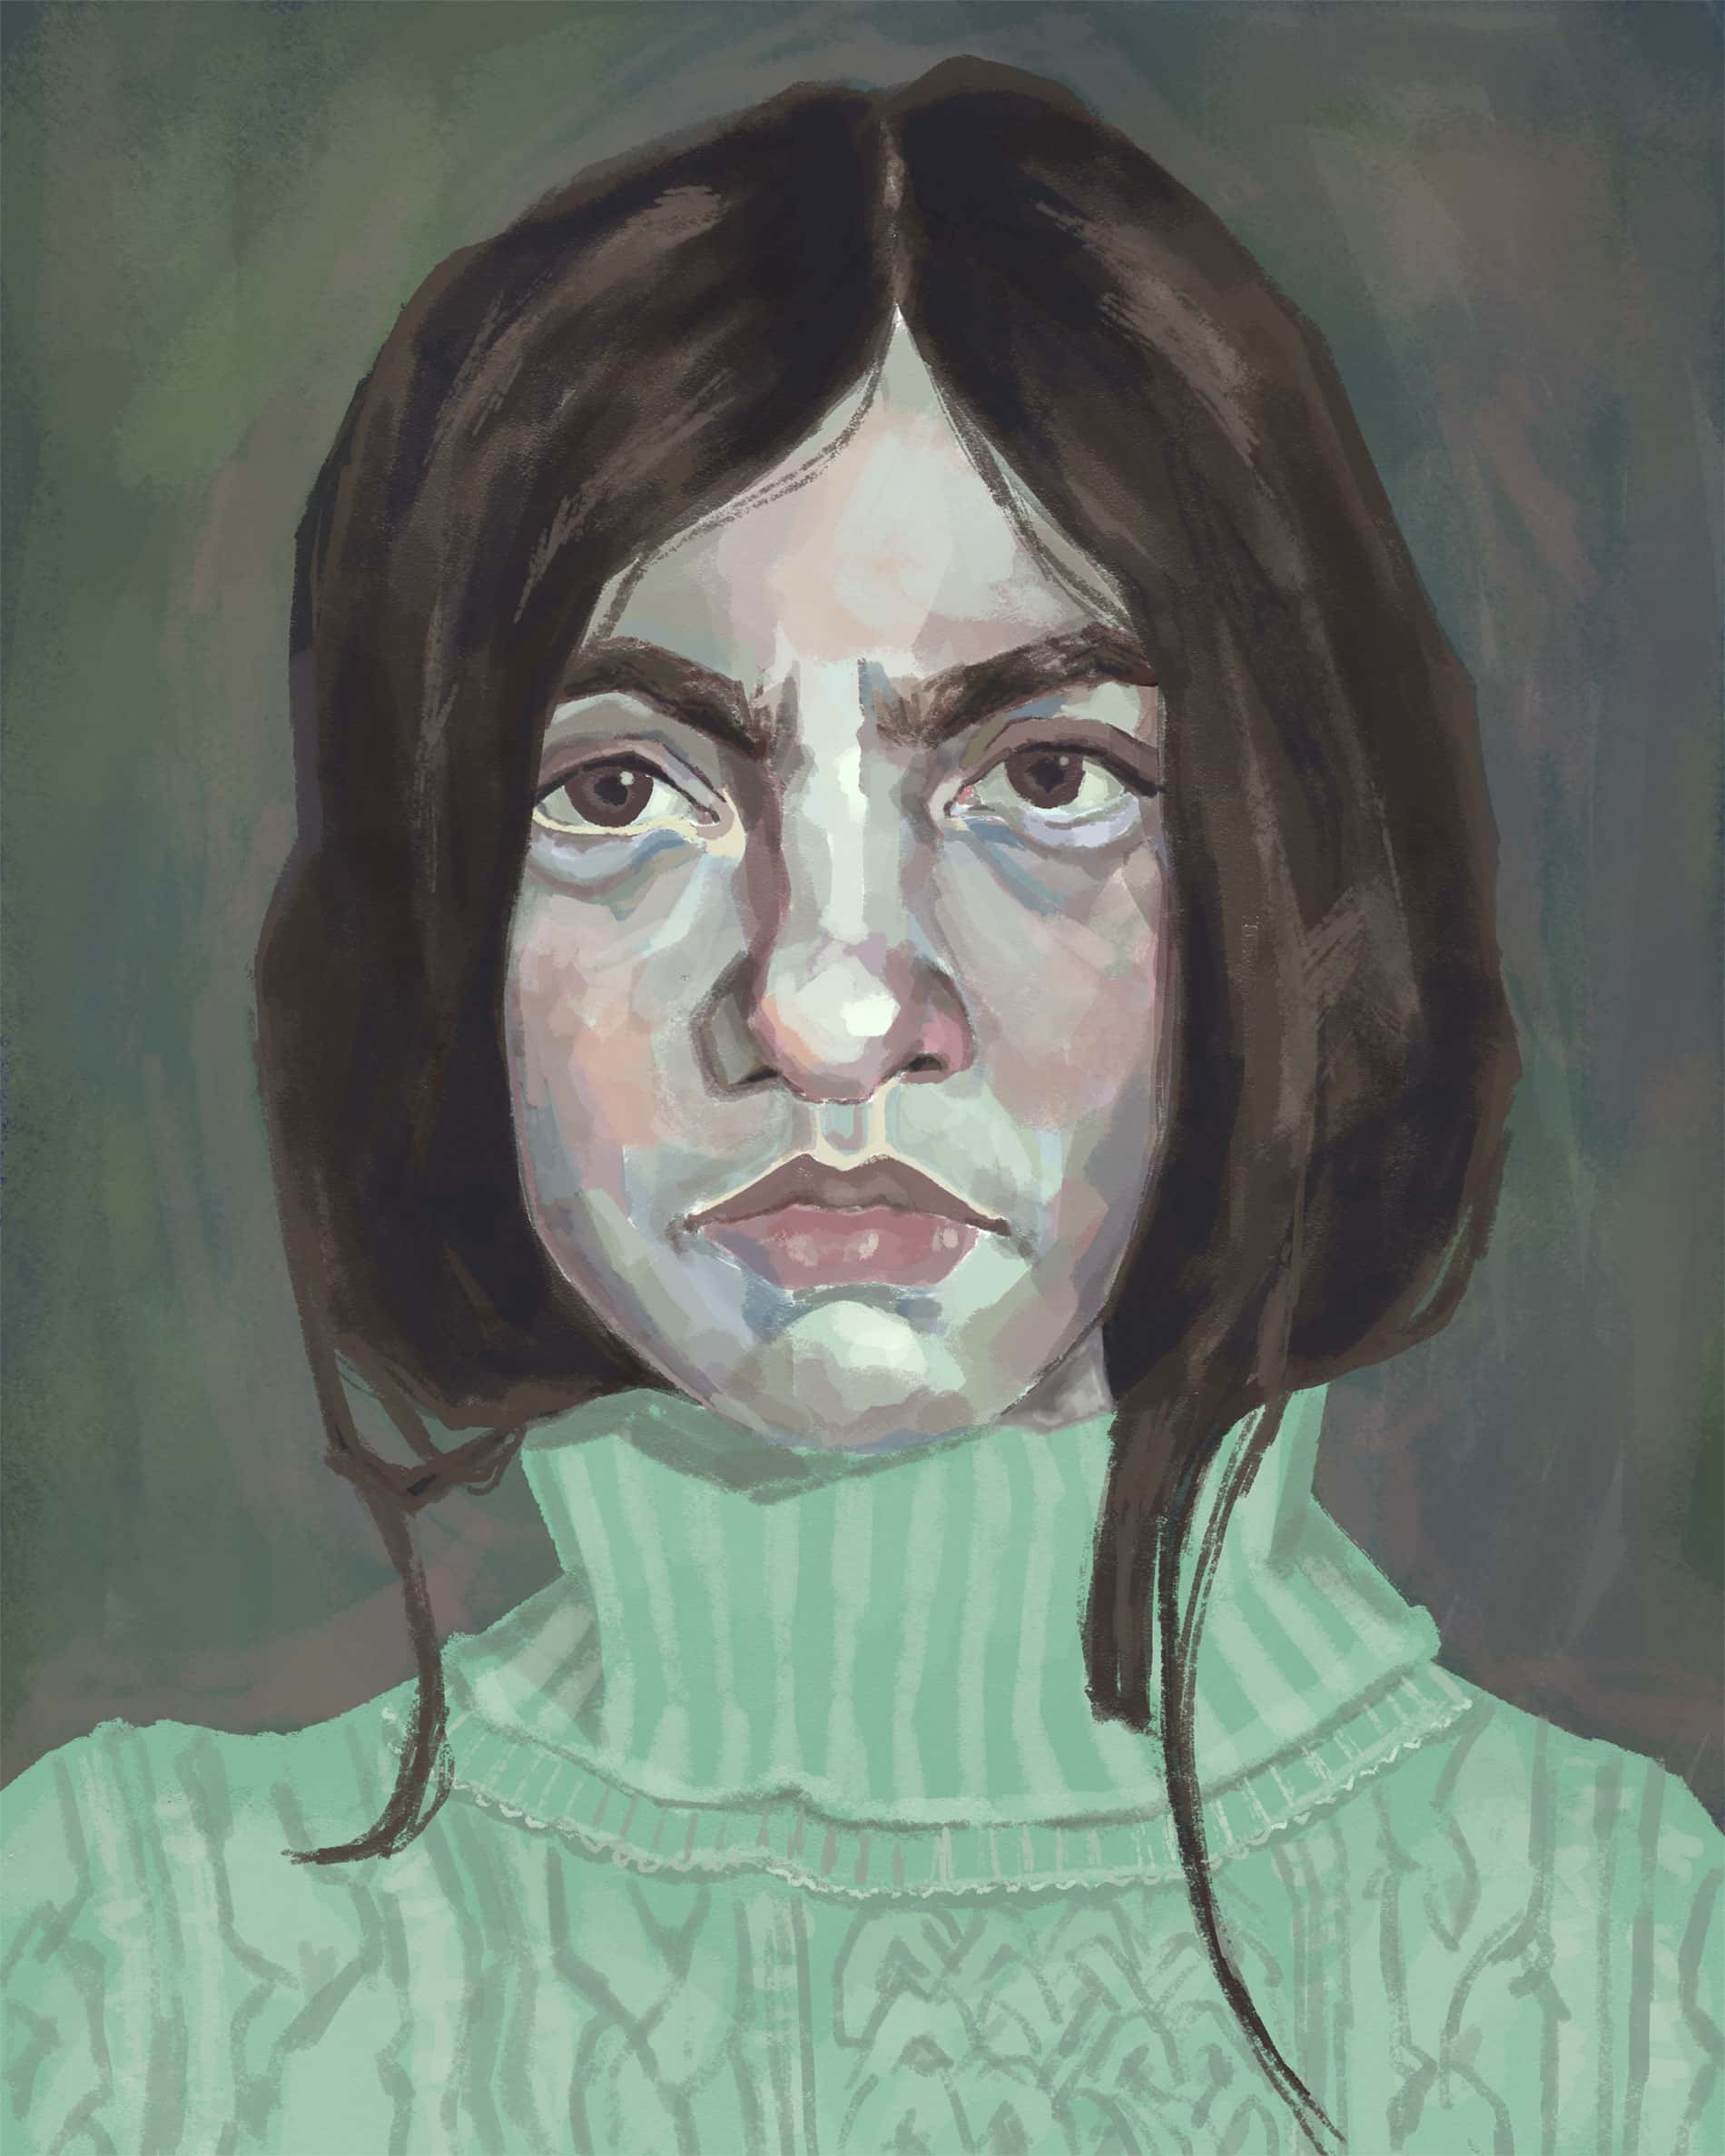 Digital portrait of an irked girl in a green turtleneck sweater